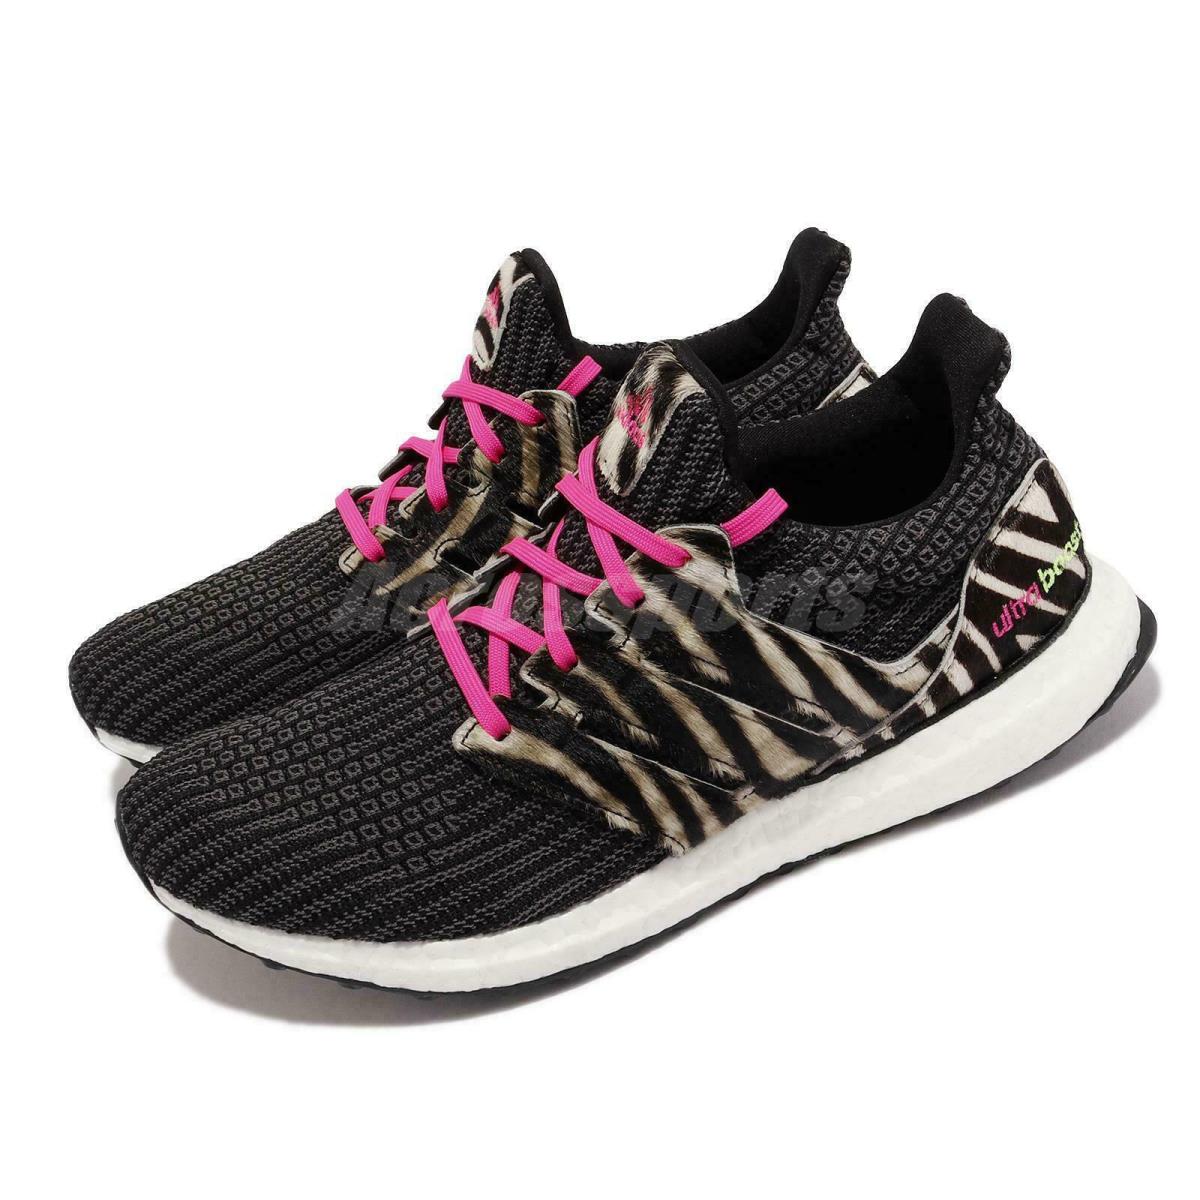 Adidas Ultraboost Dna Men`s Running Shoes Black White Pink FZ2730 - Black/White/Pink